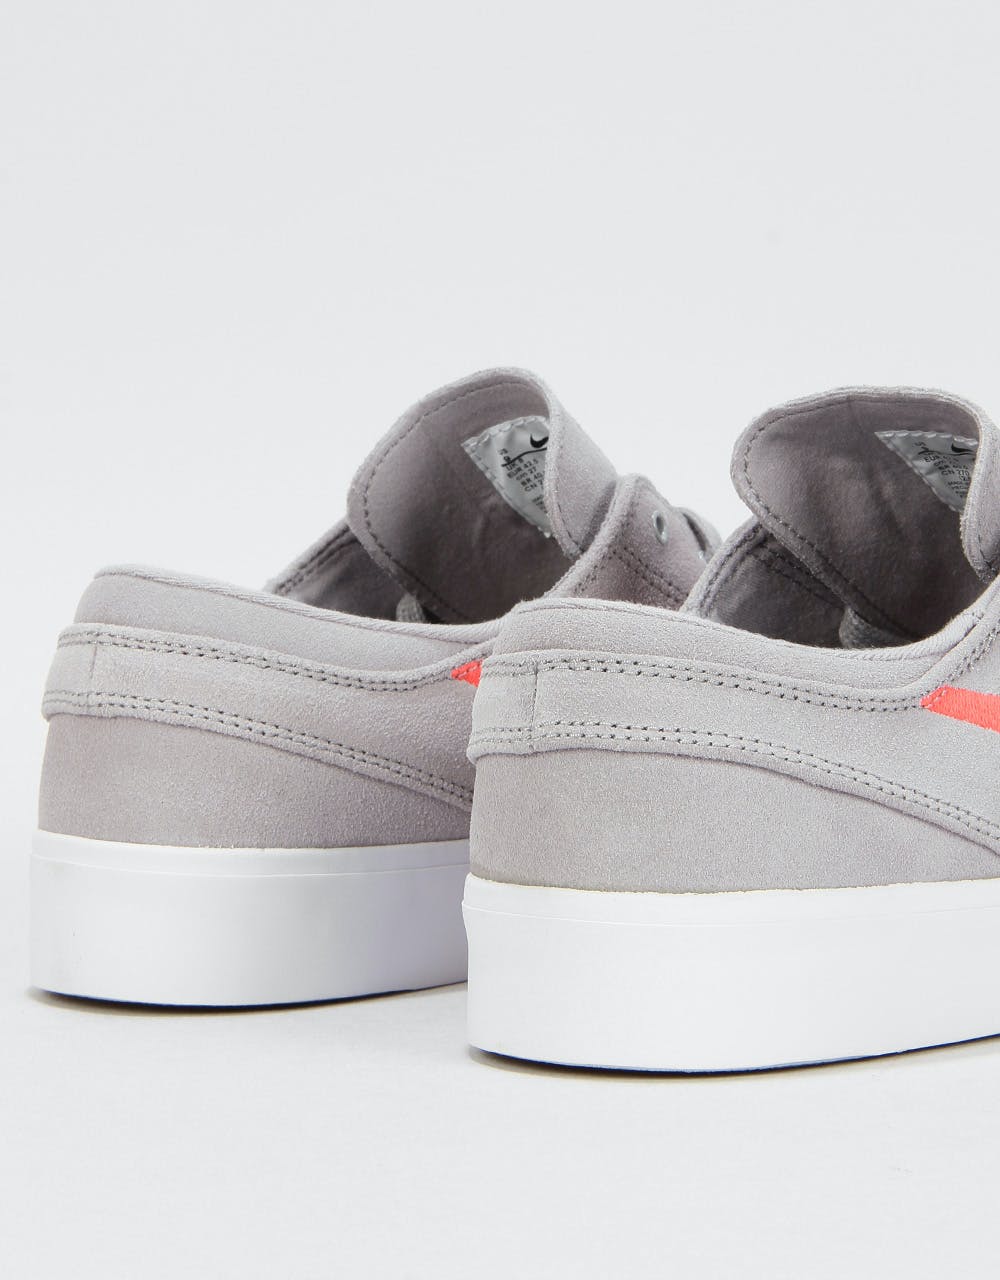 Nike SB Zoom Janoski RM Skate Shoes - Atmosphere Grey/Crimson-White